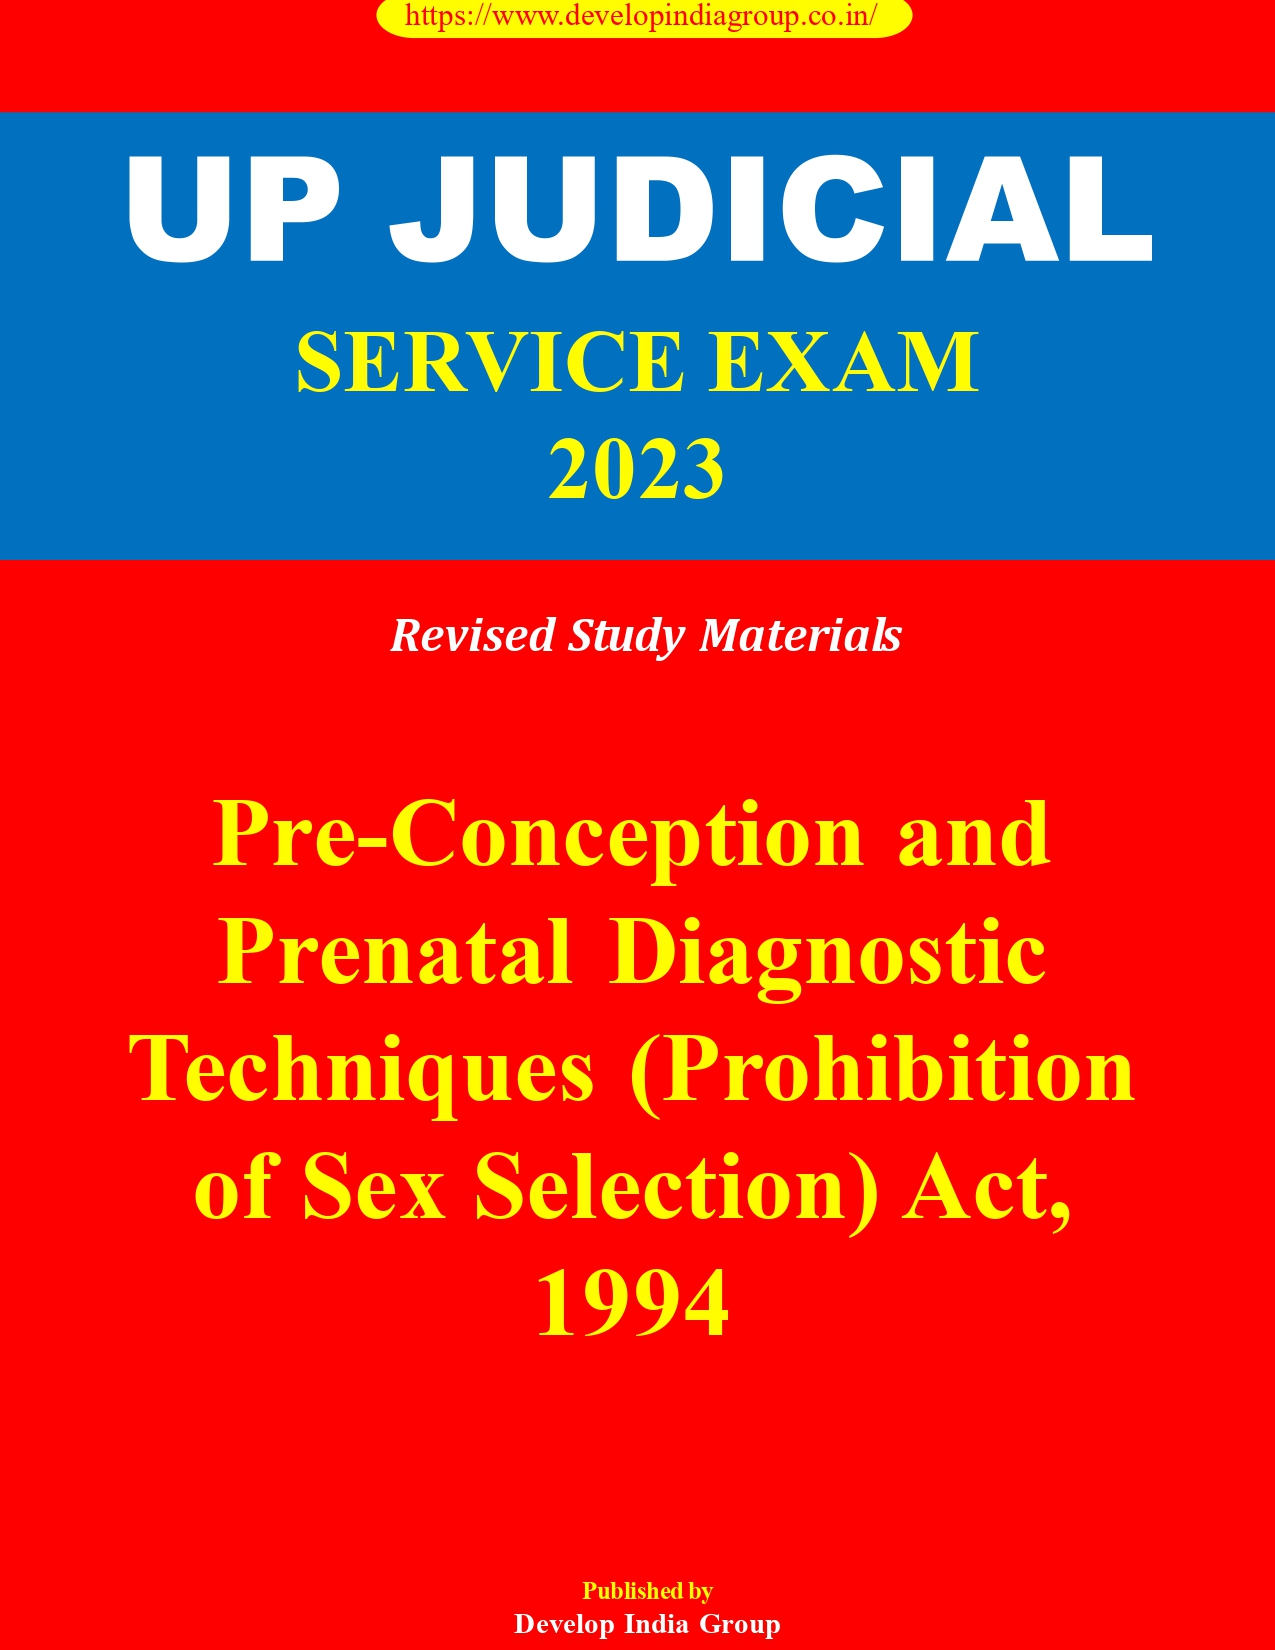 Pre-Conception and Prenatal Diagnostic Techniques (Prohibition of Sex Selection) Act, 1994 sample_page-0001